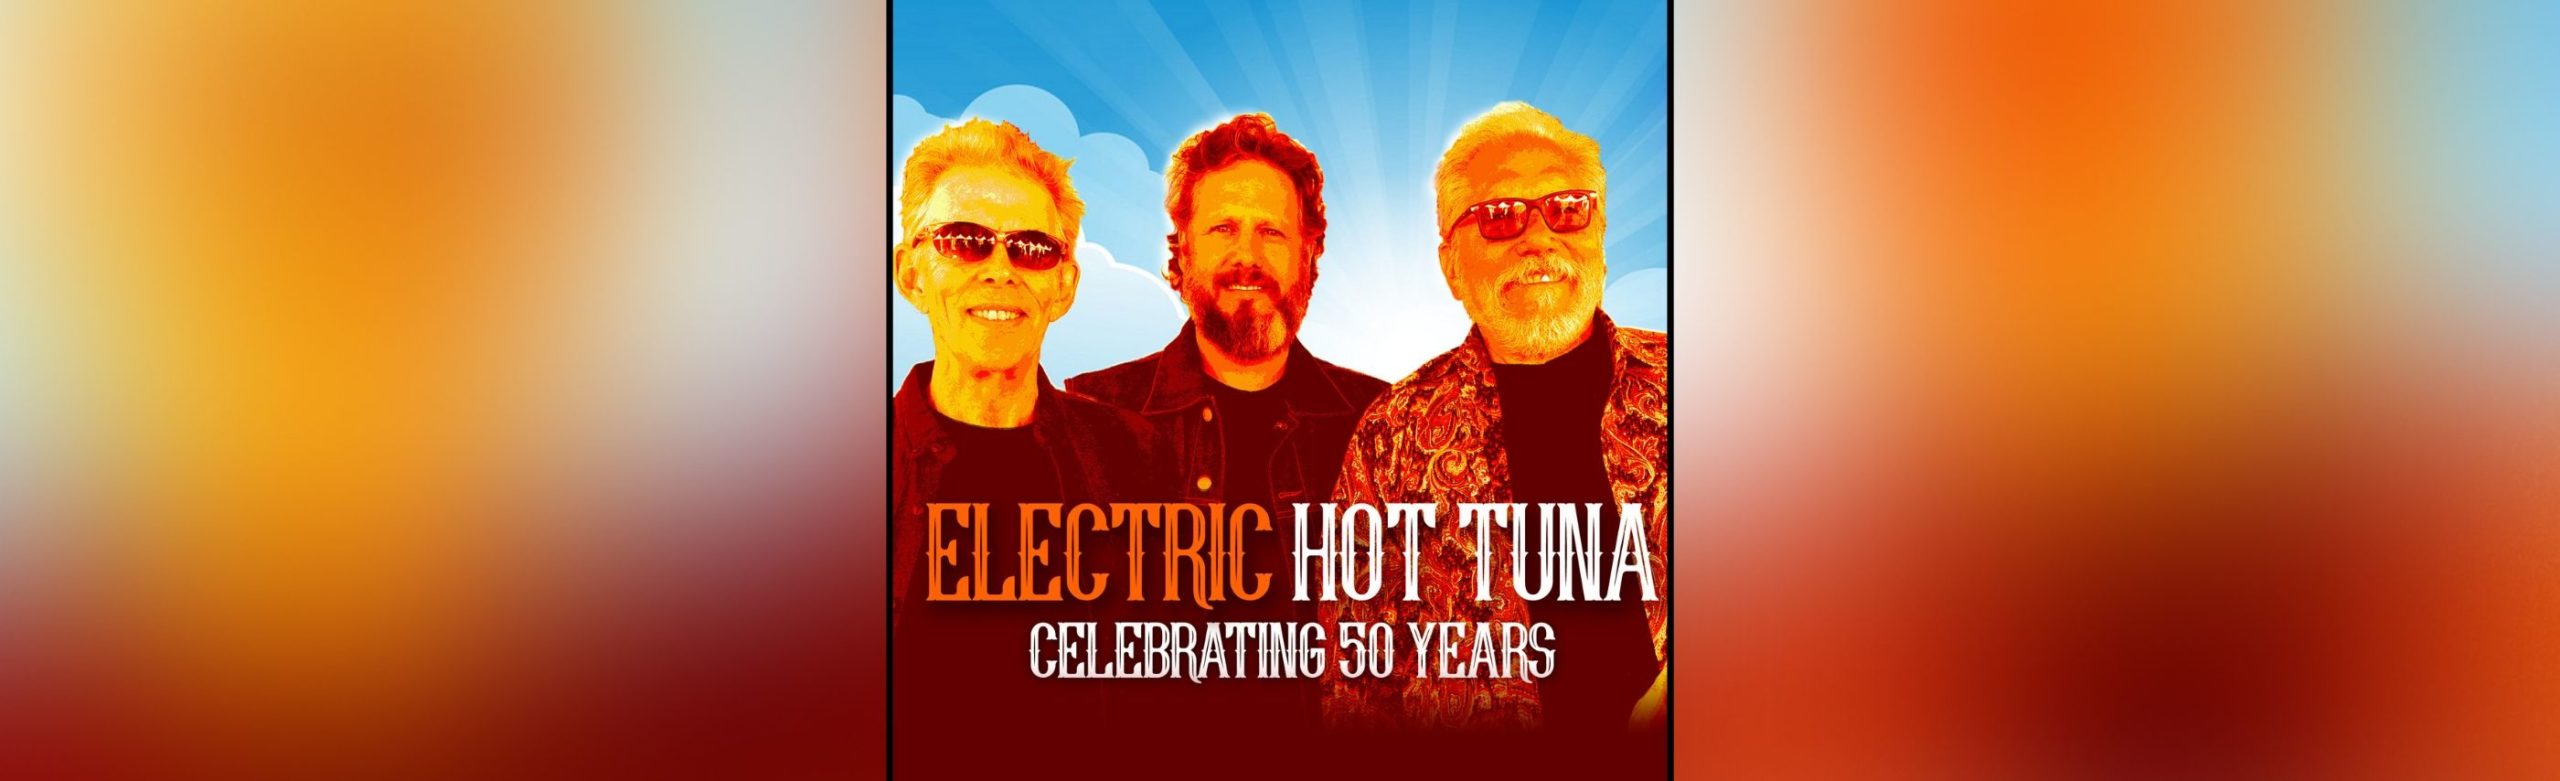 Hot Tuna Electric